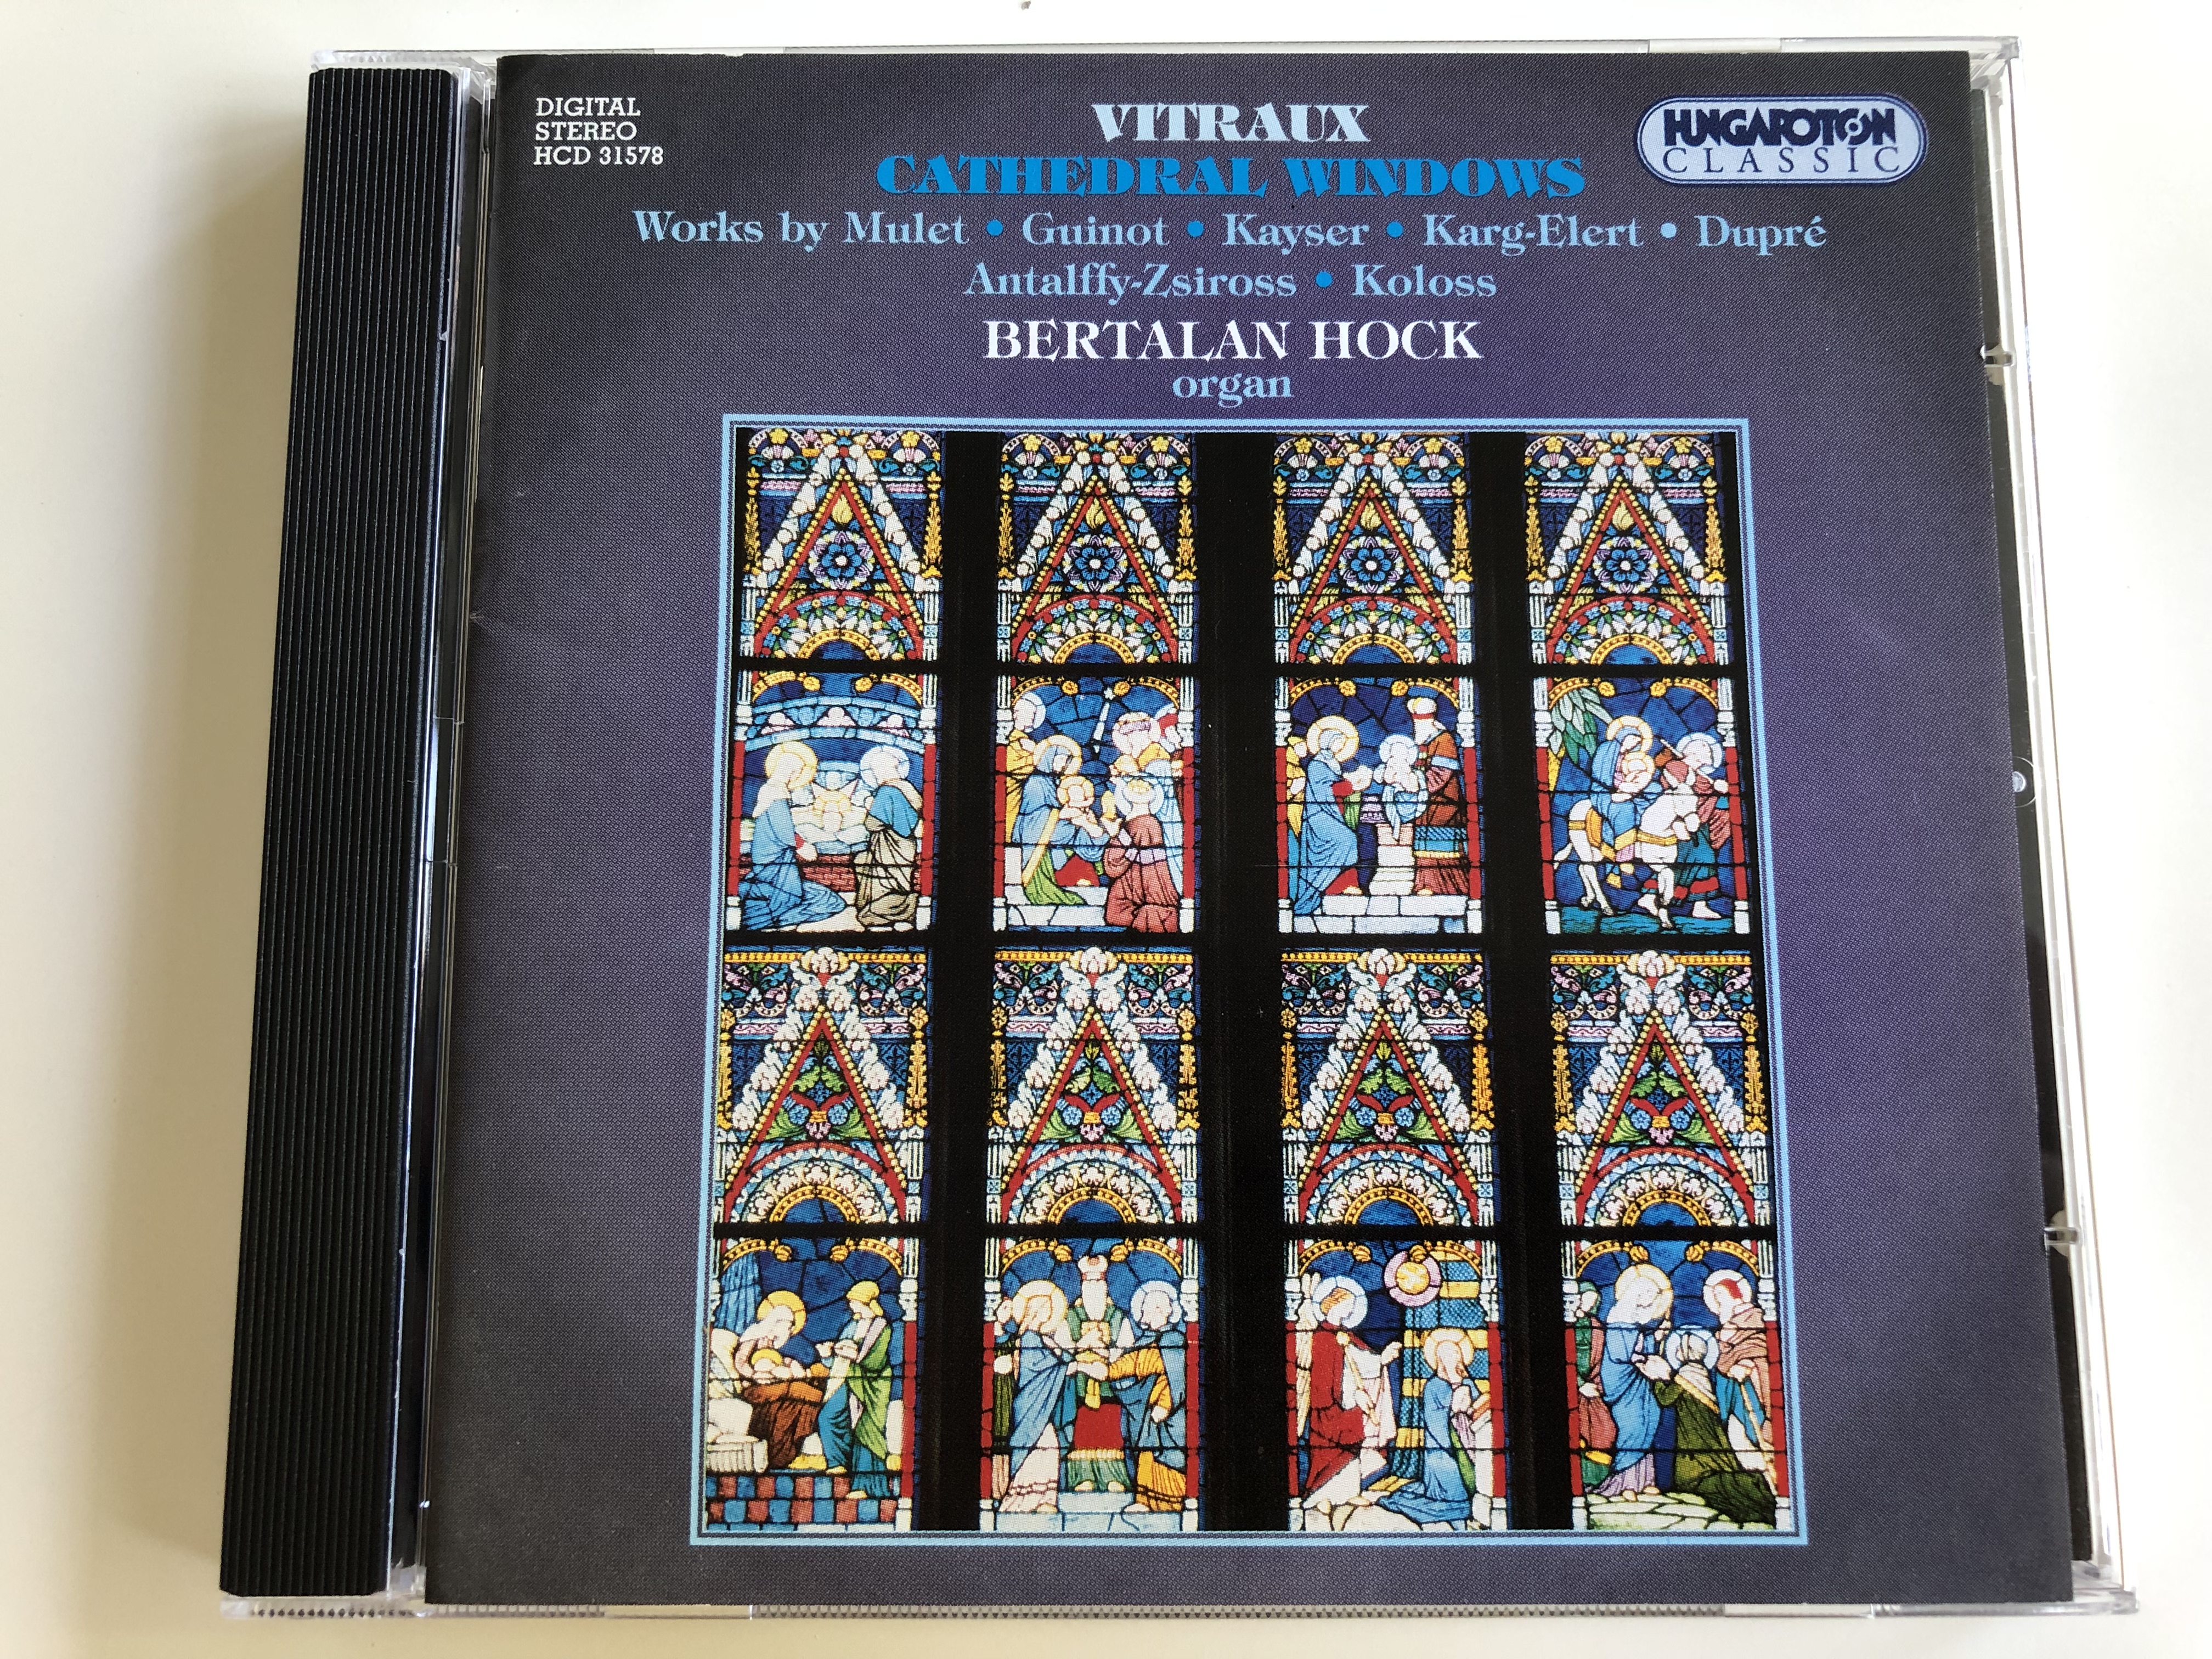 vitraux-cathedral-windows-works-by-mulet-guinot-kayser-karg-elert-dupr-antalffy-zsiross-koloss-bertalan-hock-organ-hungaroton-classic-audio-cd-1996-hcd-31578-1-.jpg